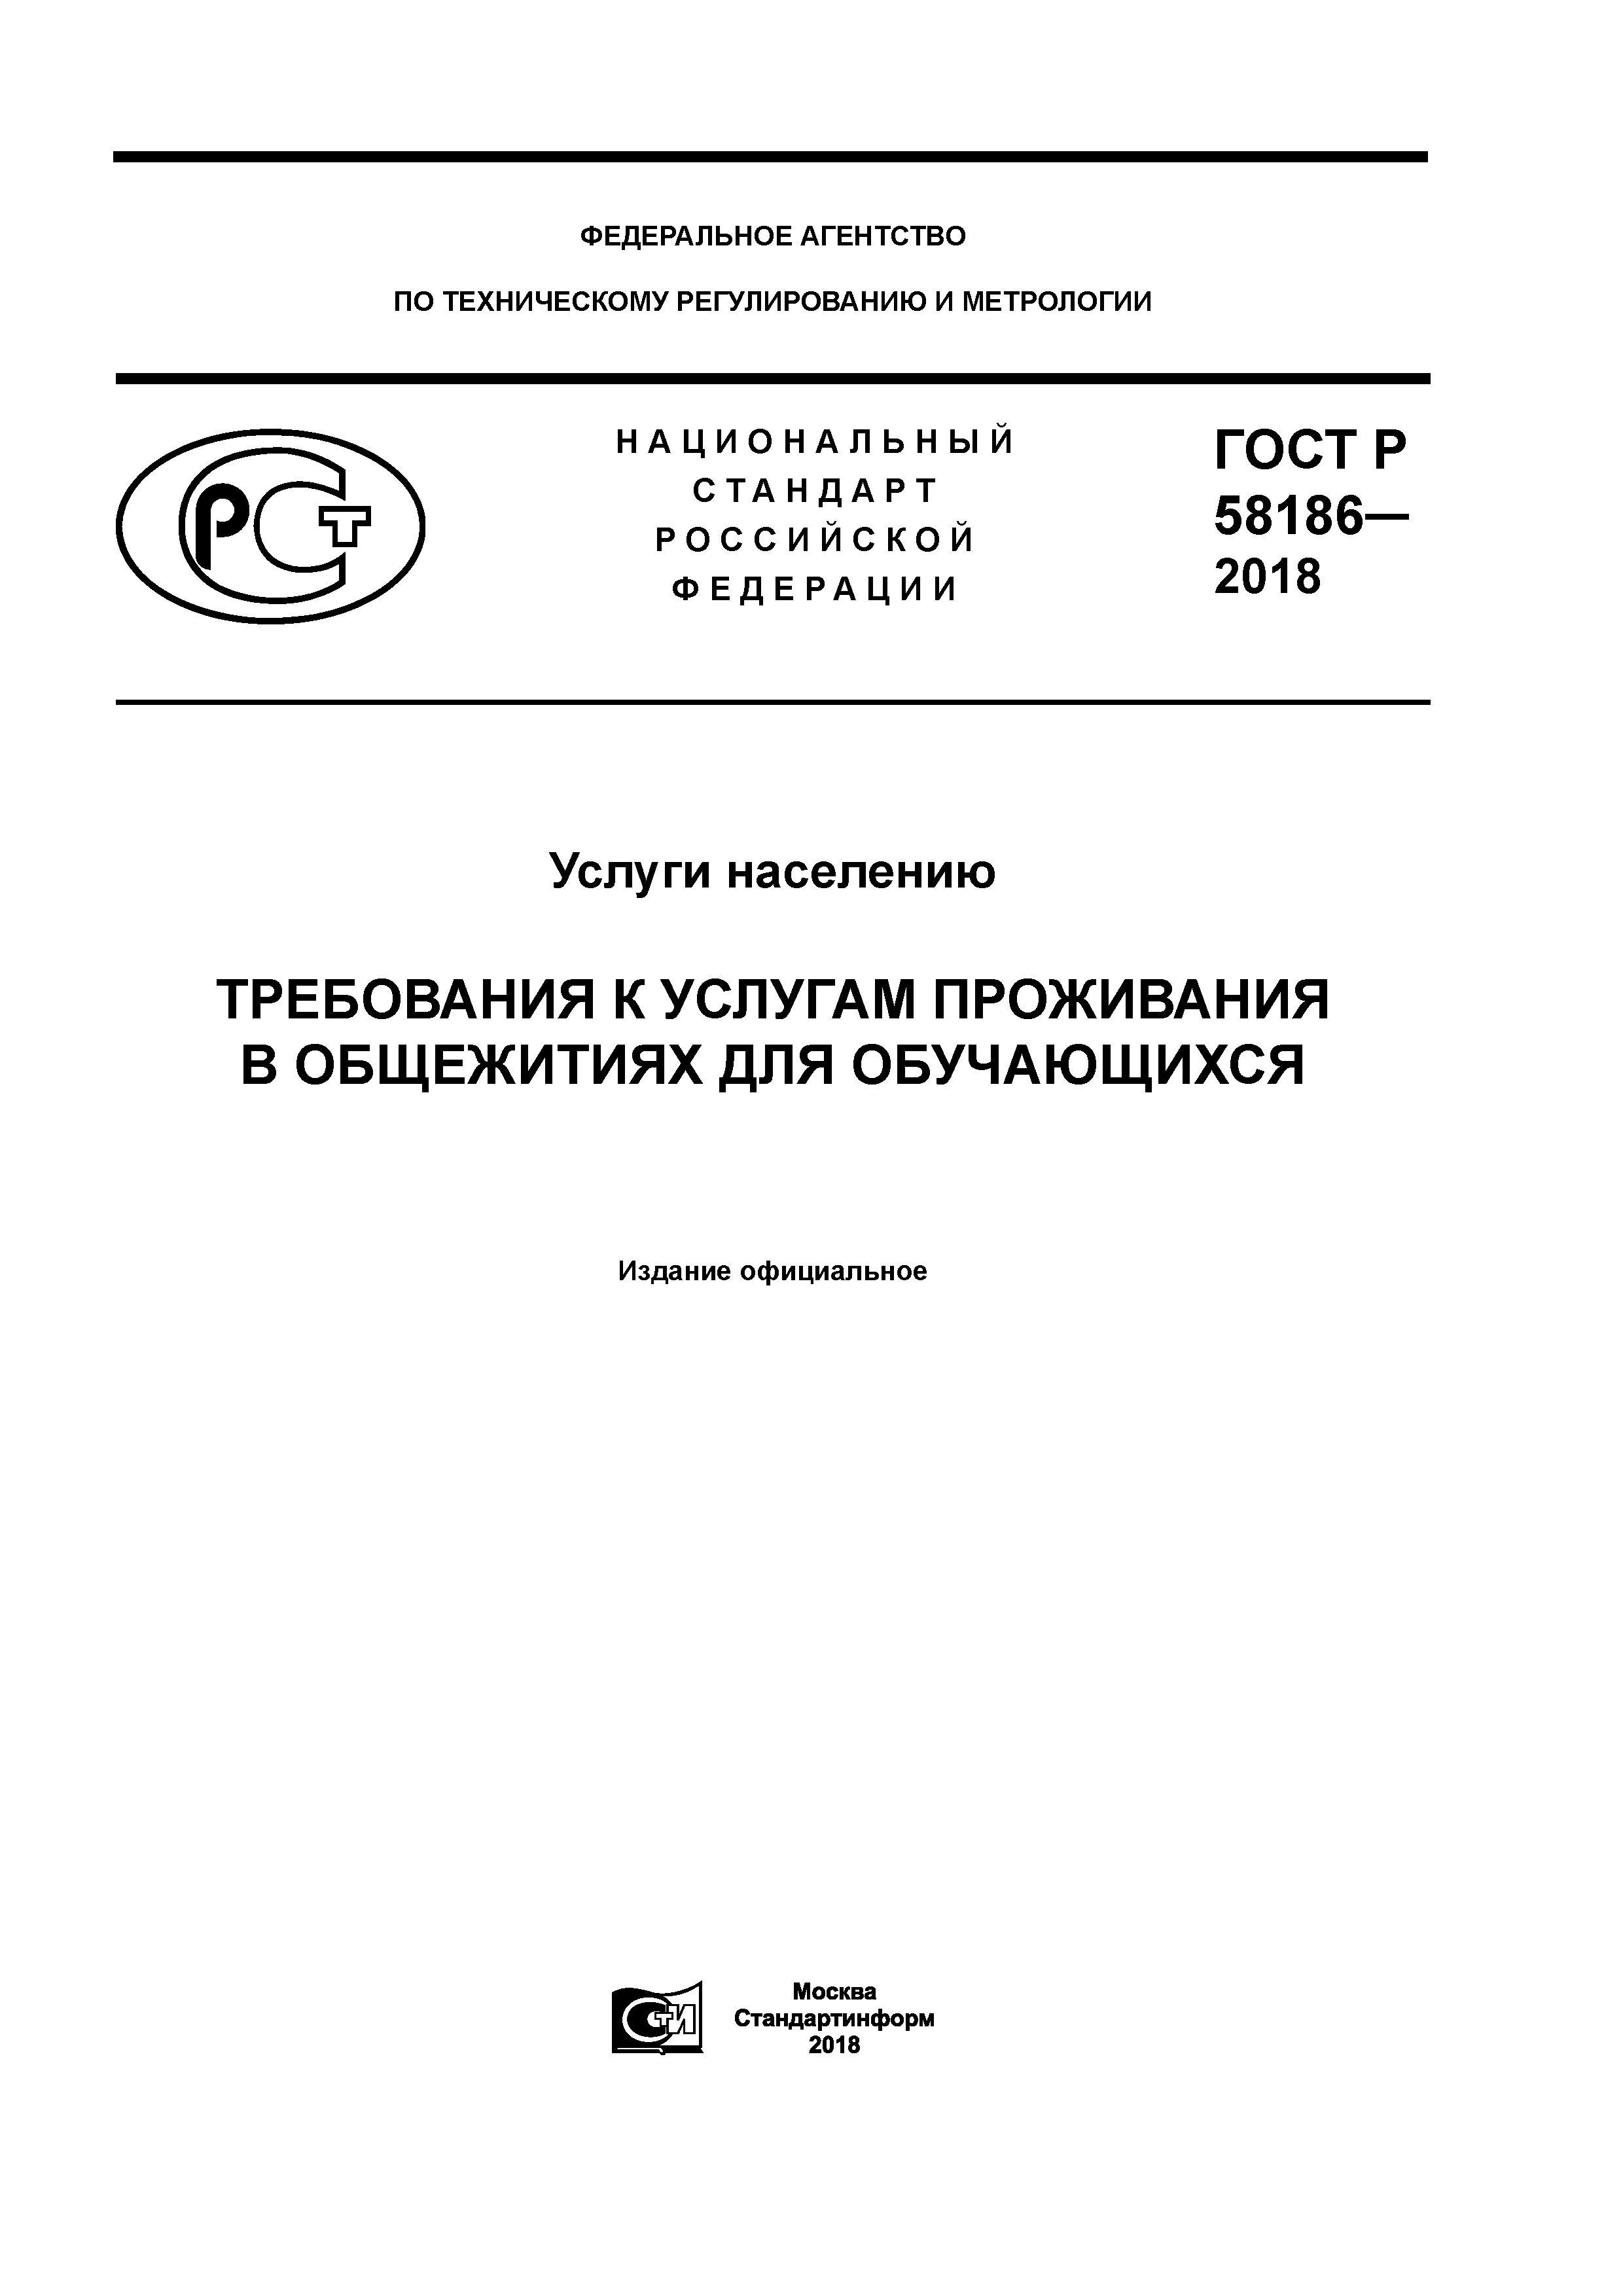 ГОСТ Р 58186-2018